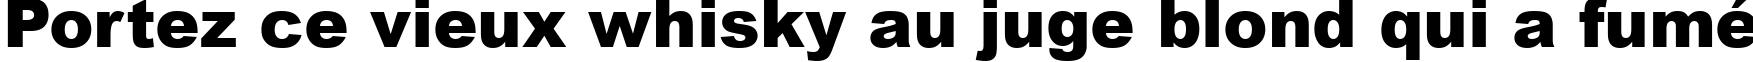 Пример написания шрифтом Arial Black текста на французском